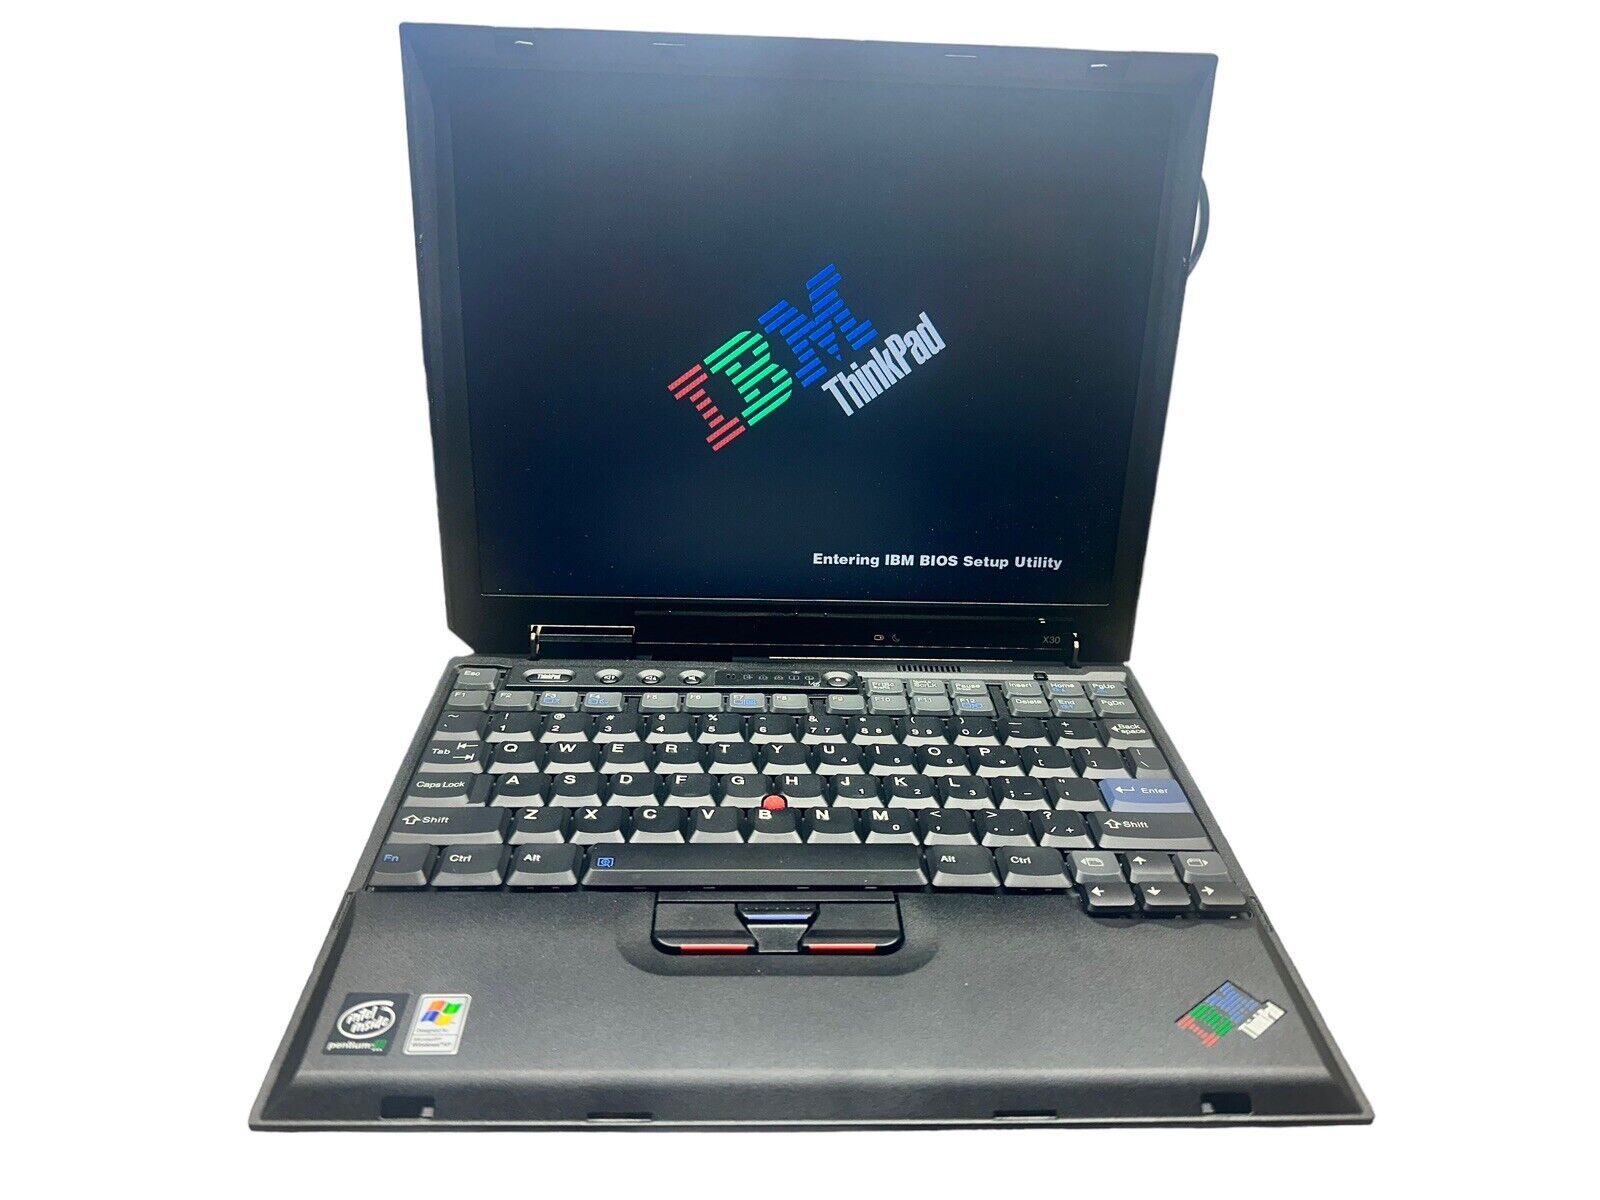 IBM Thinkpad X30 Laptop Intel Pentium 3 M 1.2GHz 256MB Ram No HDD or Battery